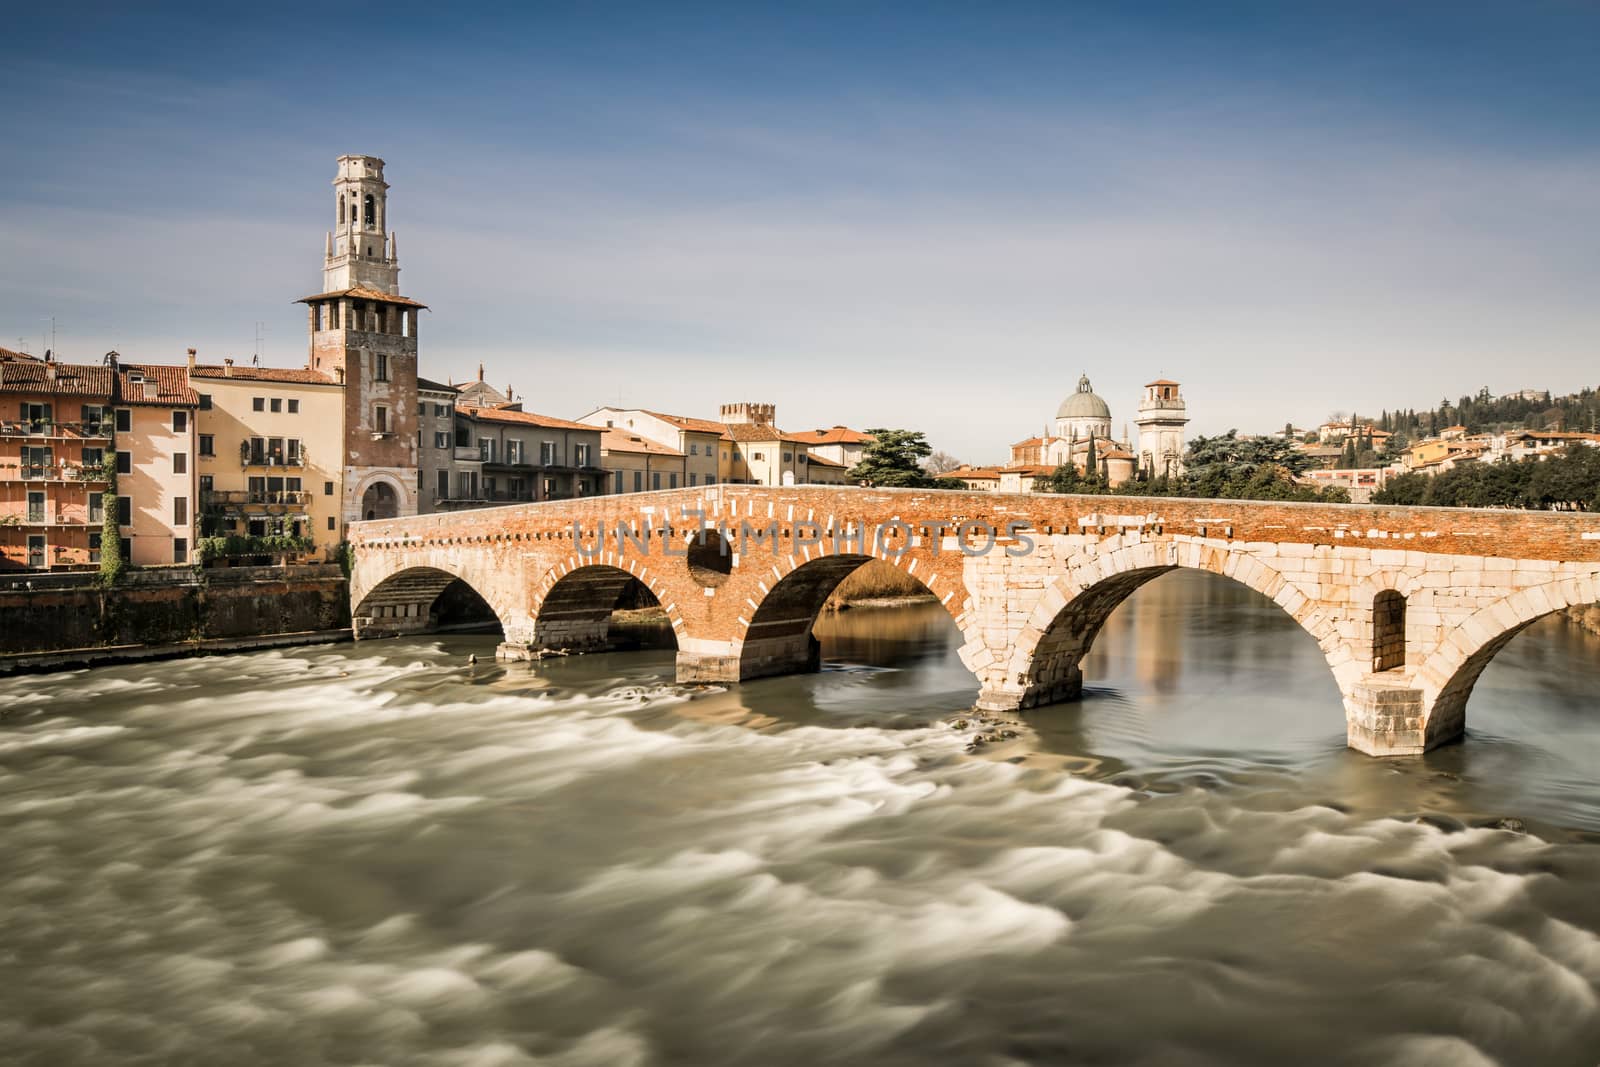 "Stone Bridge", the famous old bridge in Verona, Italy. by Isaac74